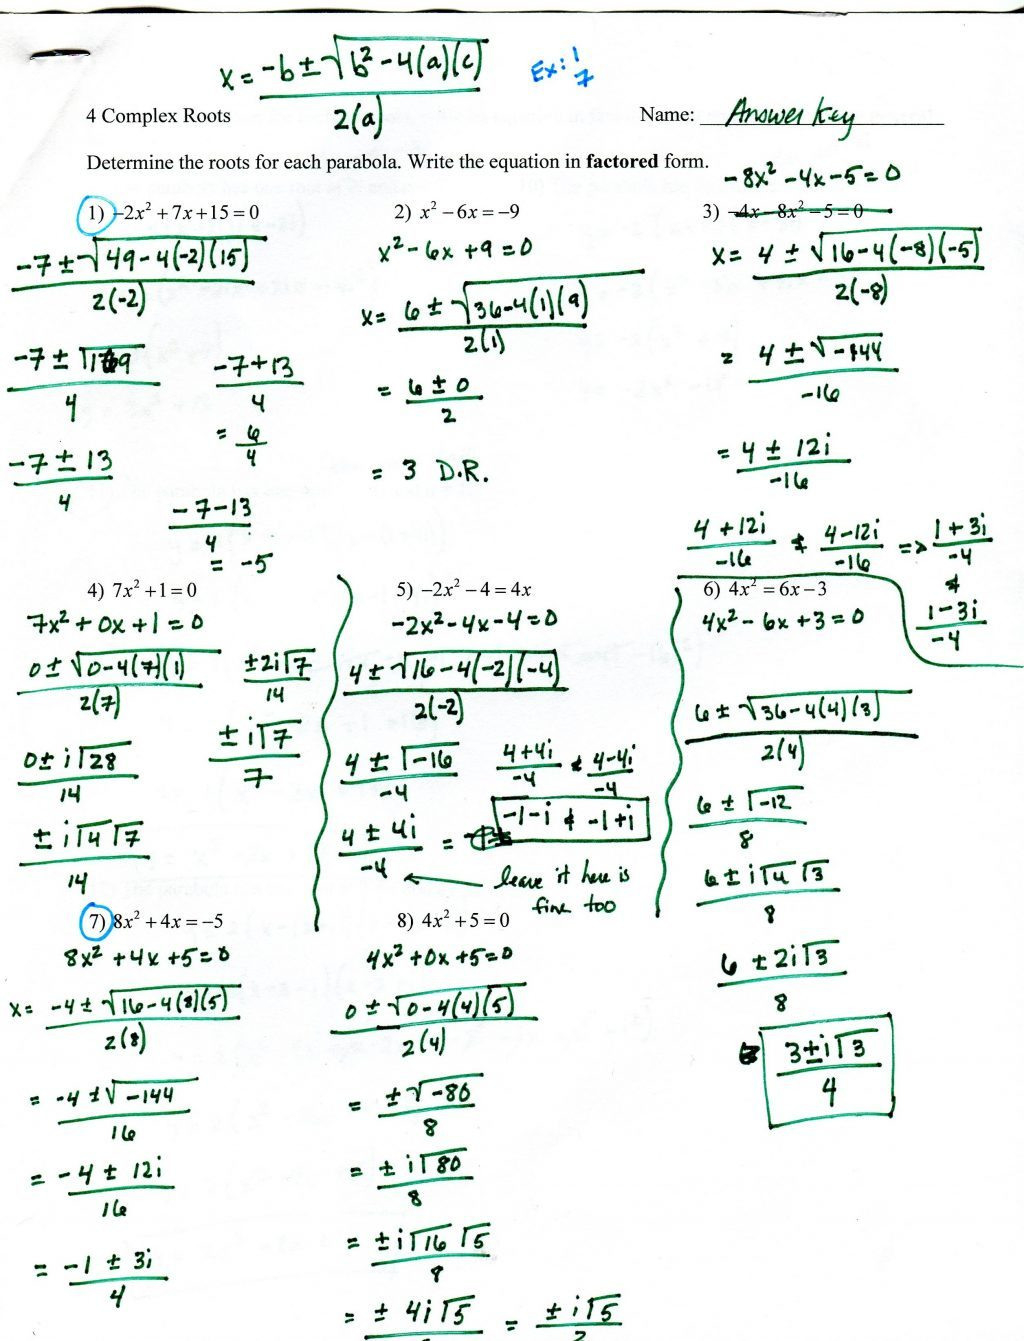 factoring trinomials common core algebra 2 homework answers